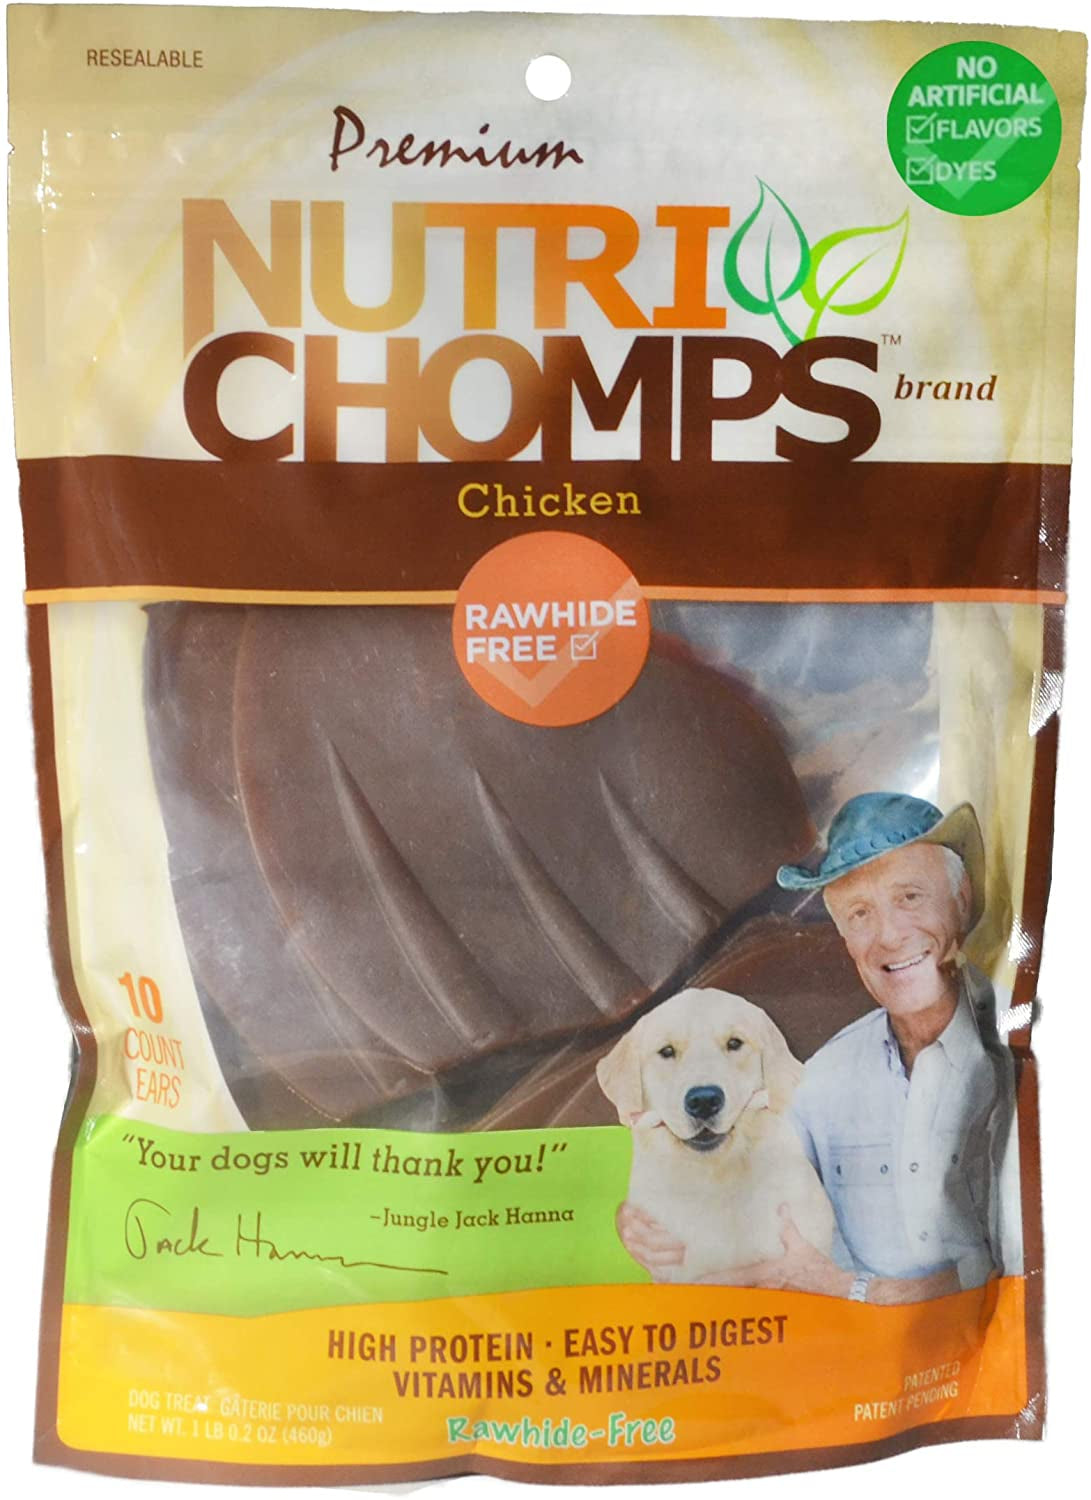 Nutri Chomps Pig Ear Shaped Dog Treat Chicken Flavor